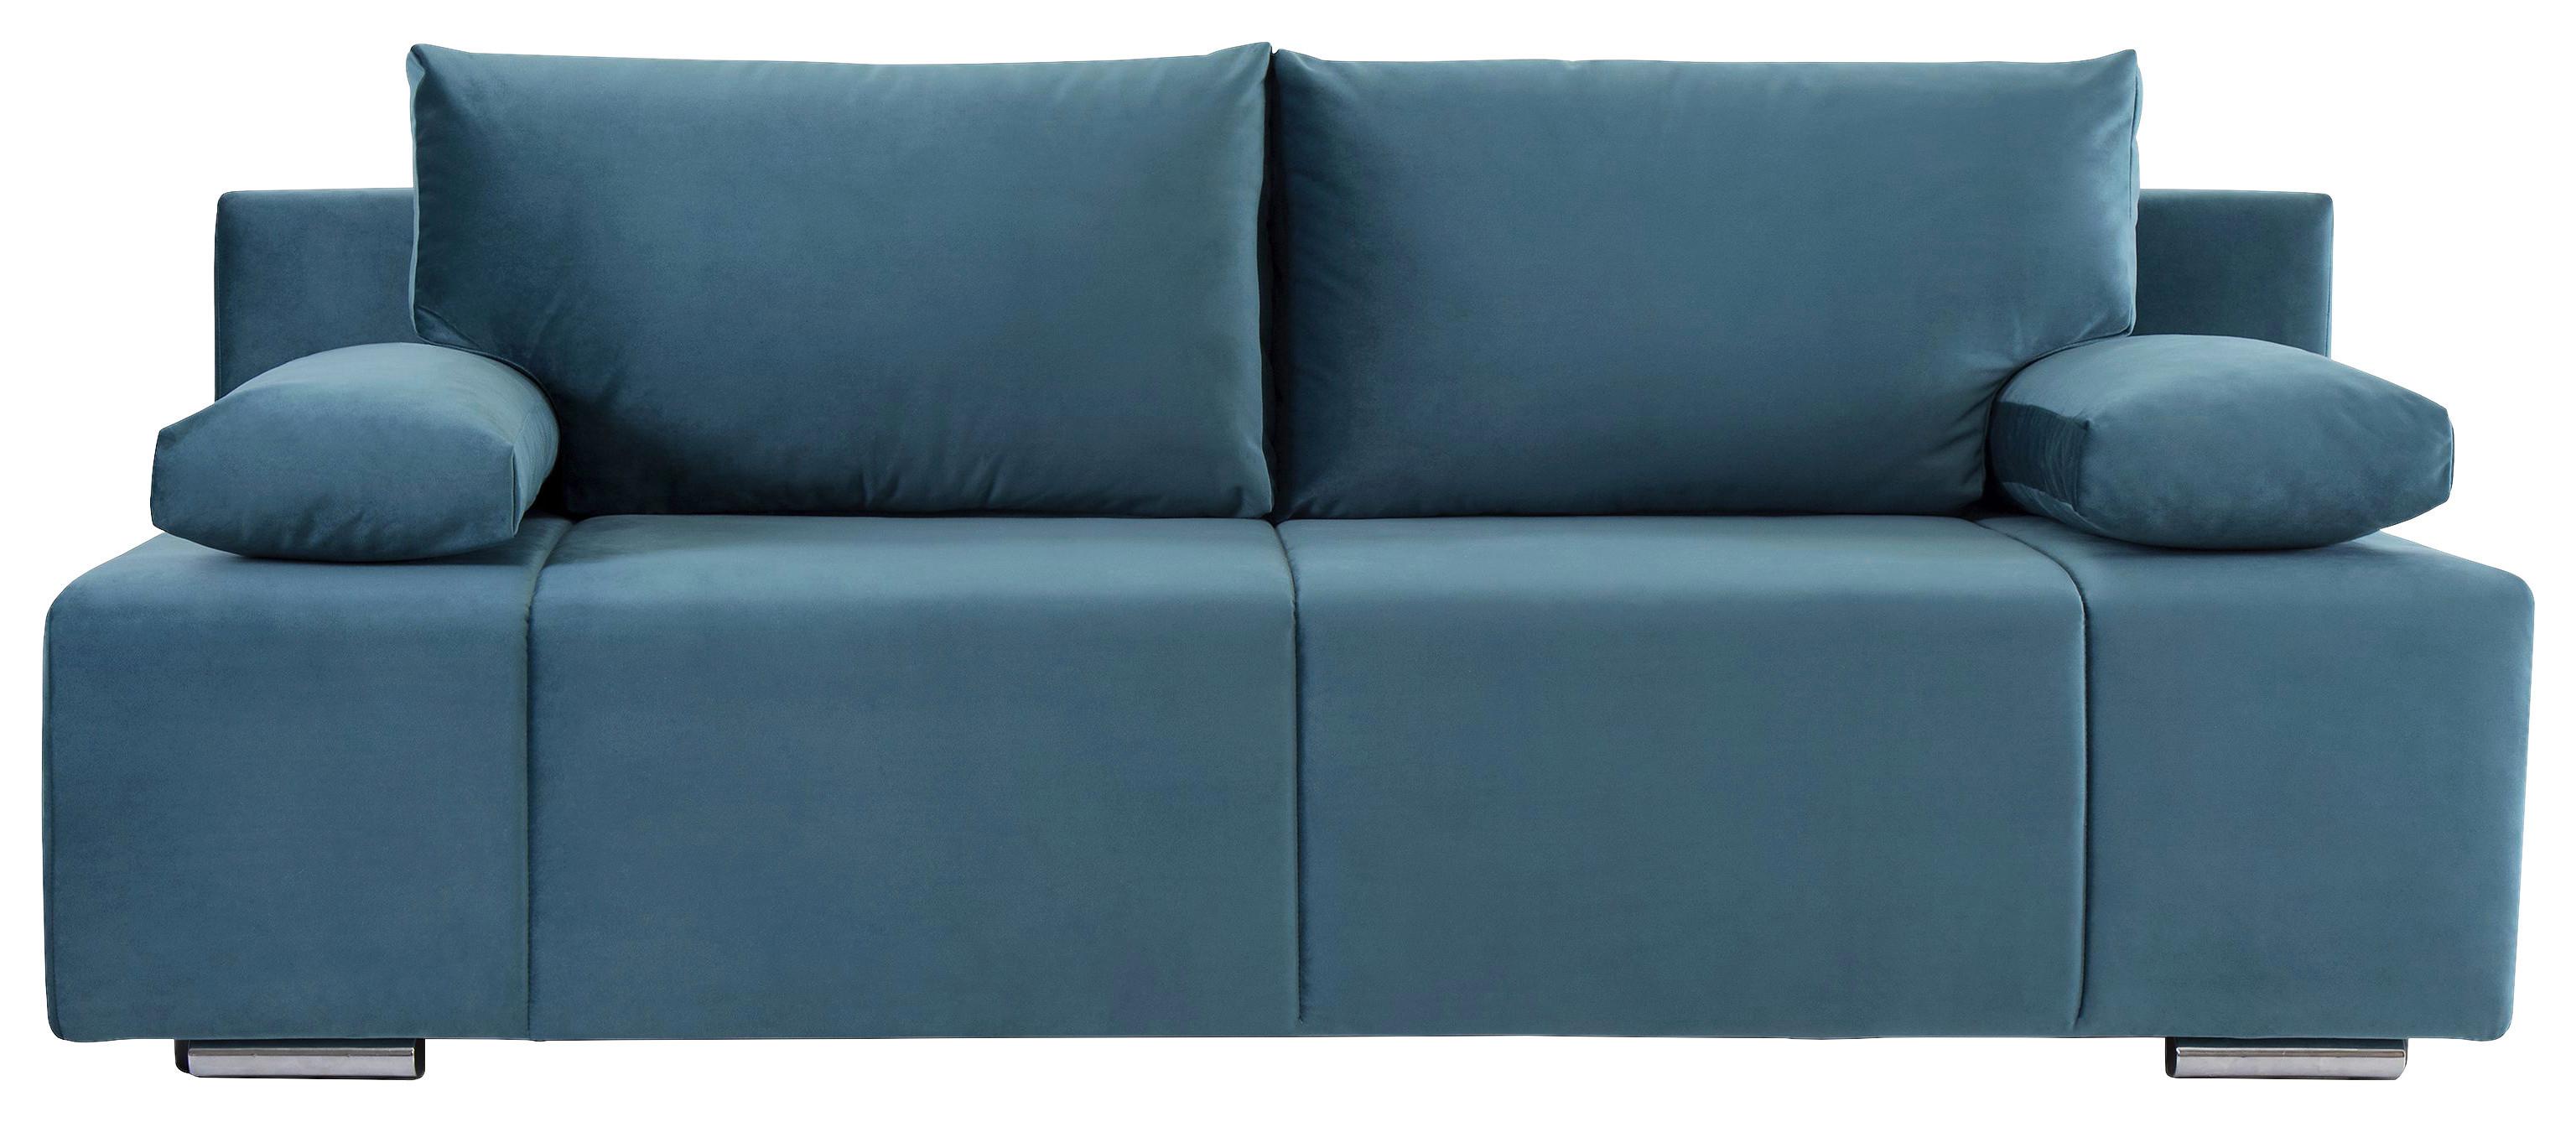 Sofa Una - Top - - Modern (89/74/201cm) - Based